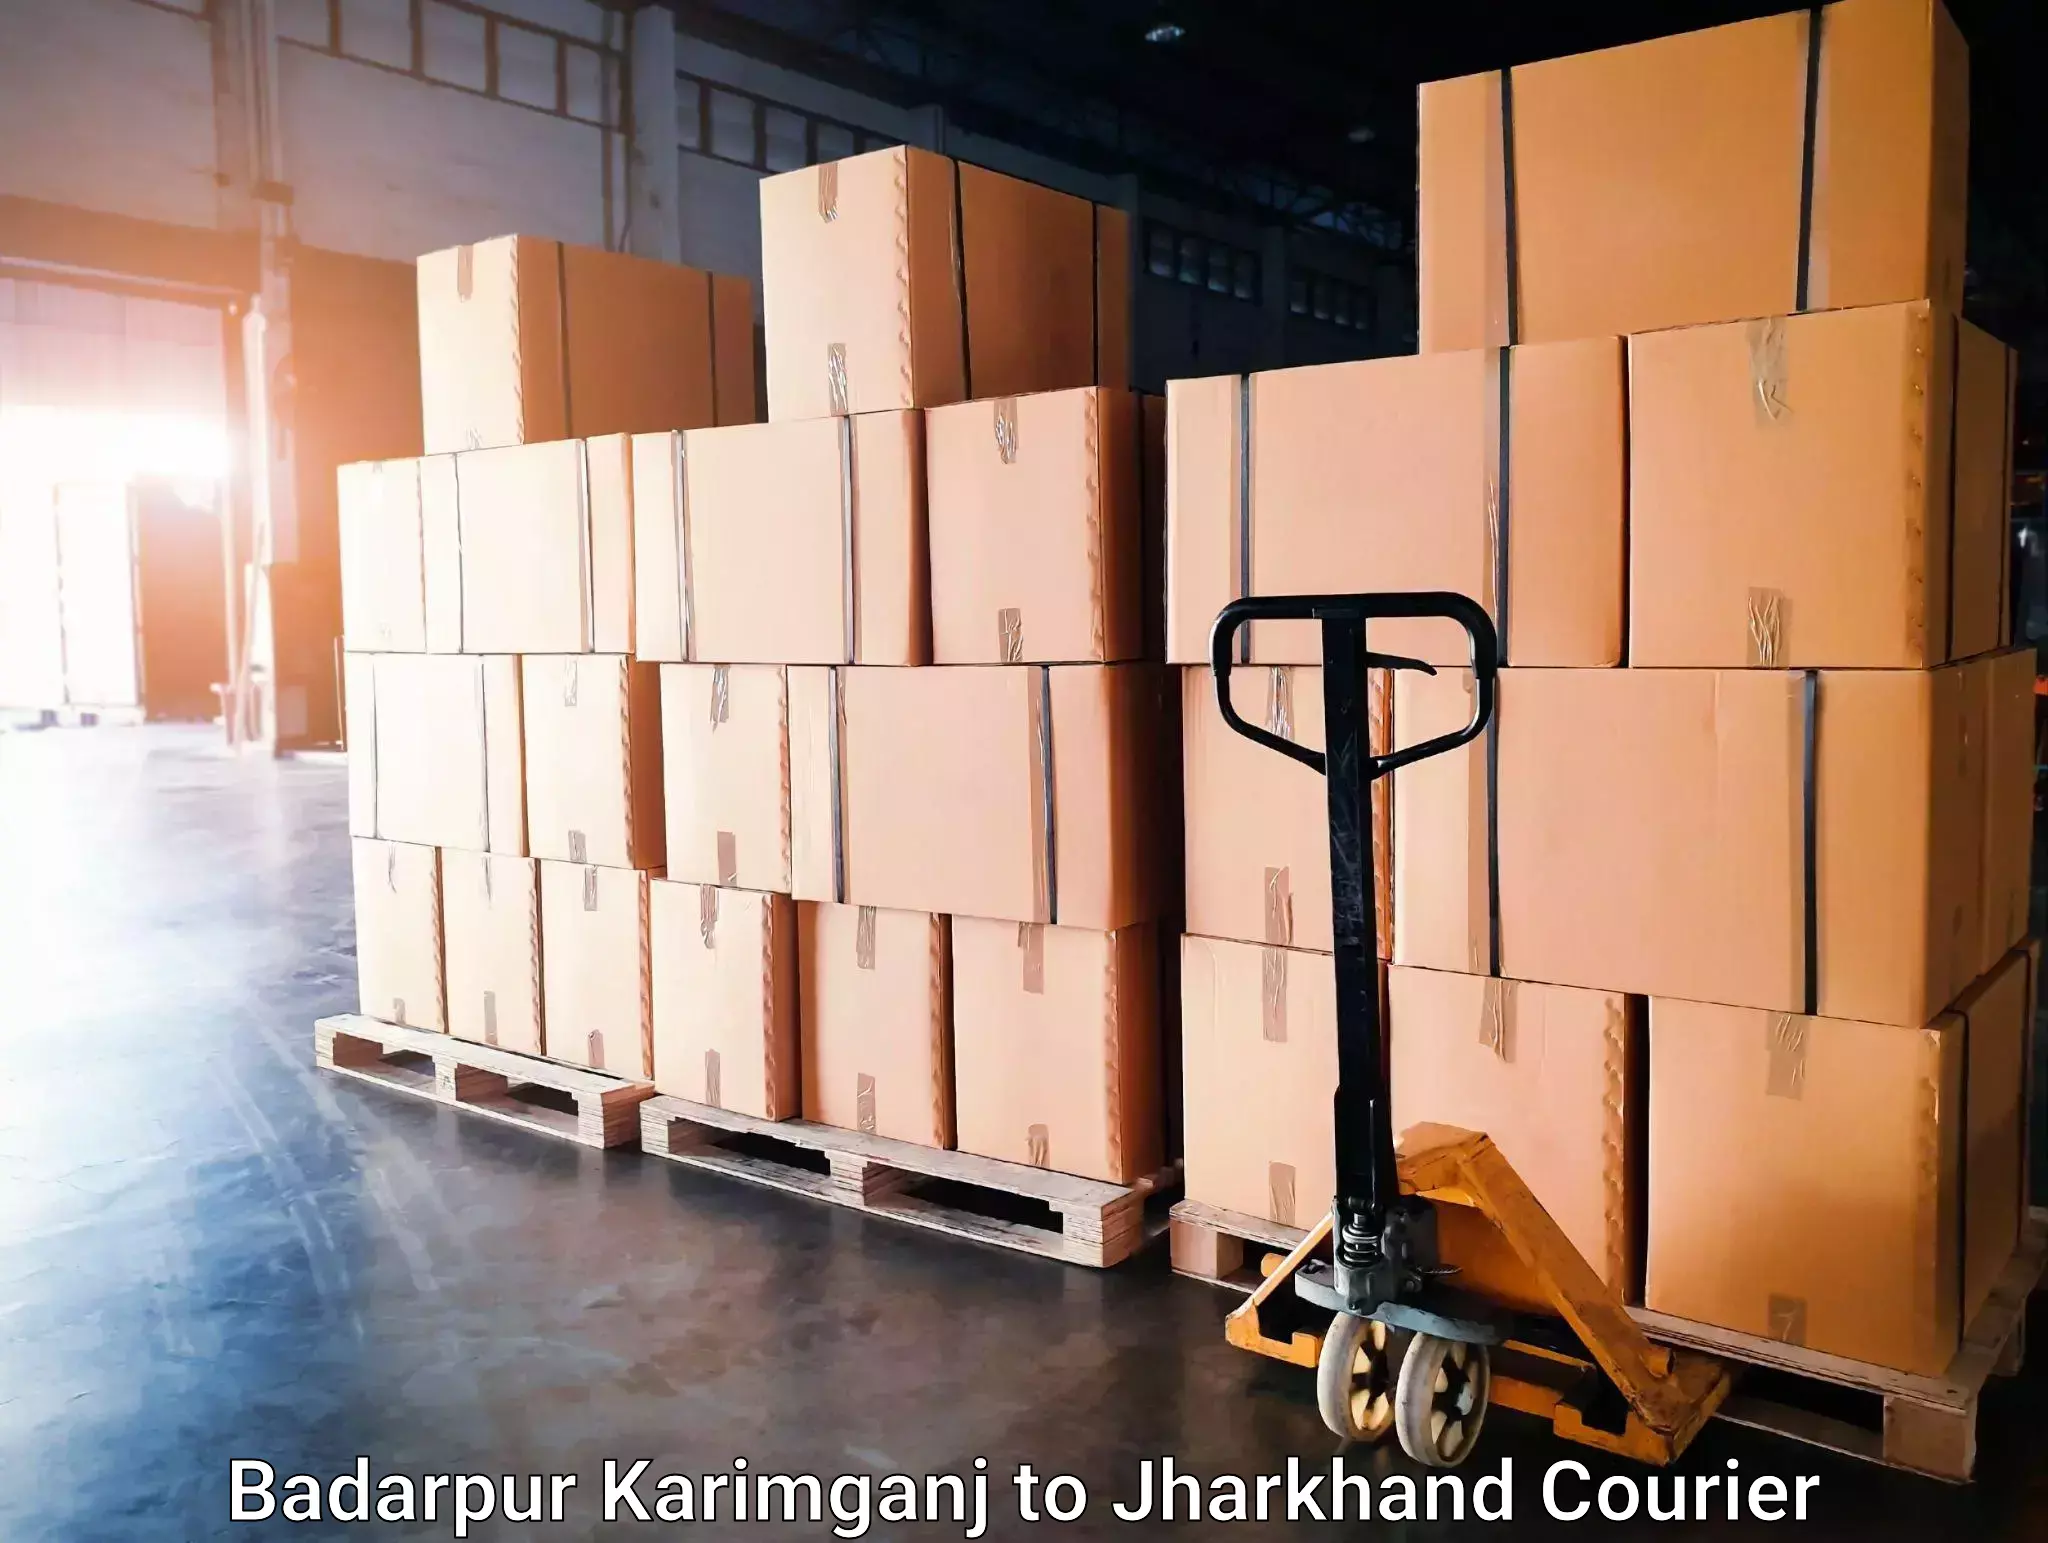 Courier tracking online Badarpur Karimganj to Padma Hazaribagh